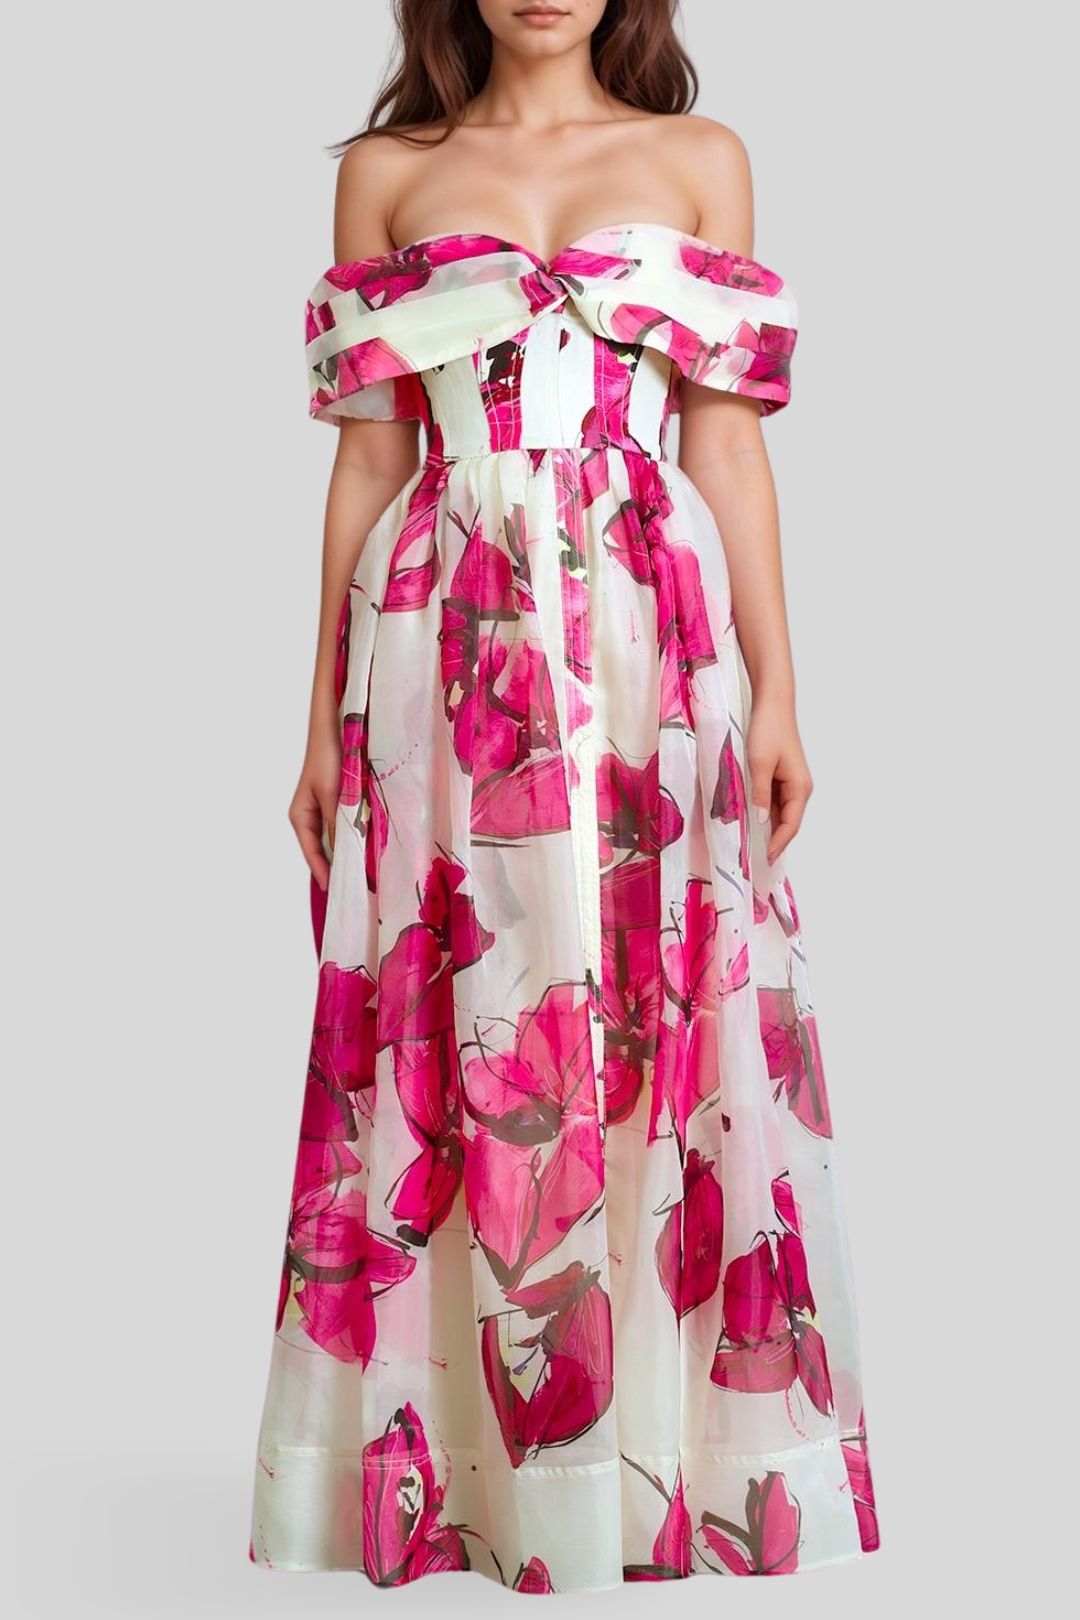 AJE Cordelia Corseted Maxi Dress Pink floral